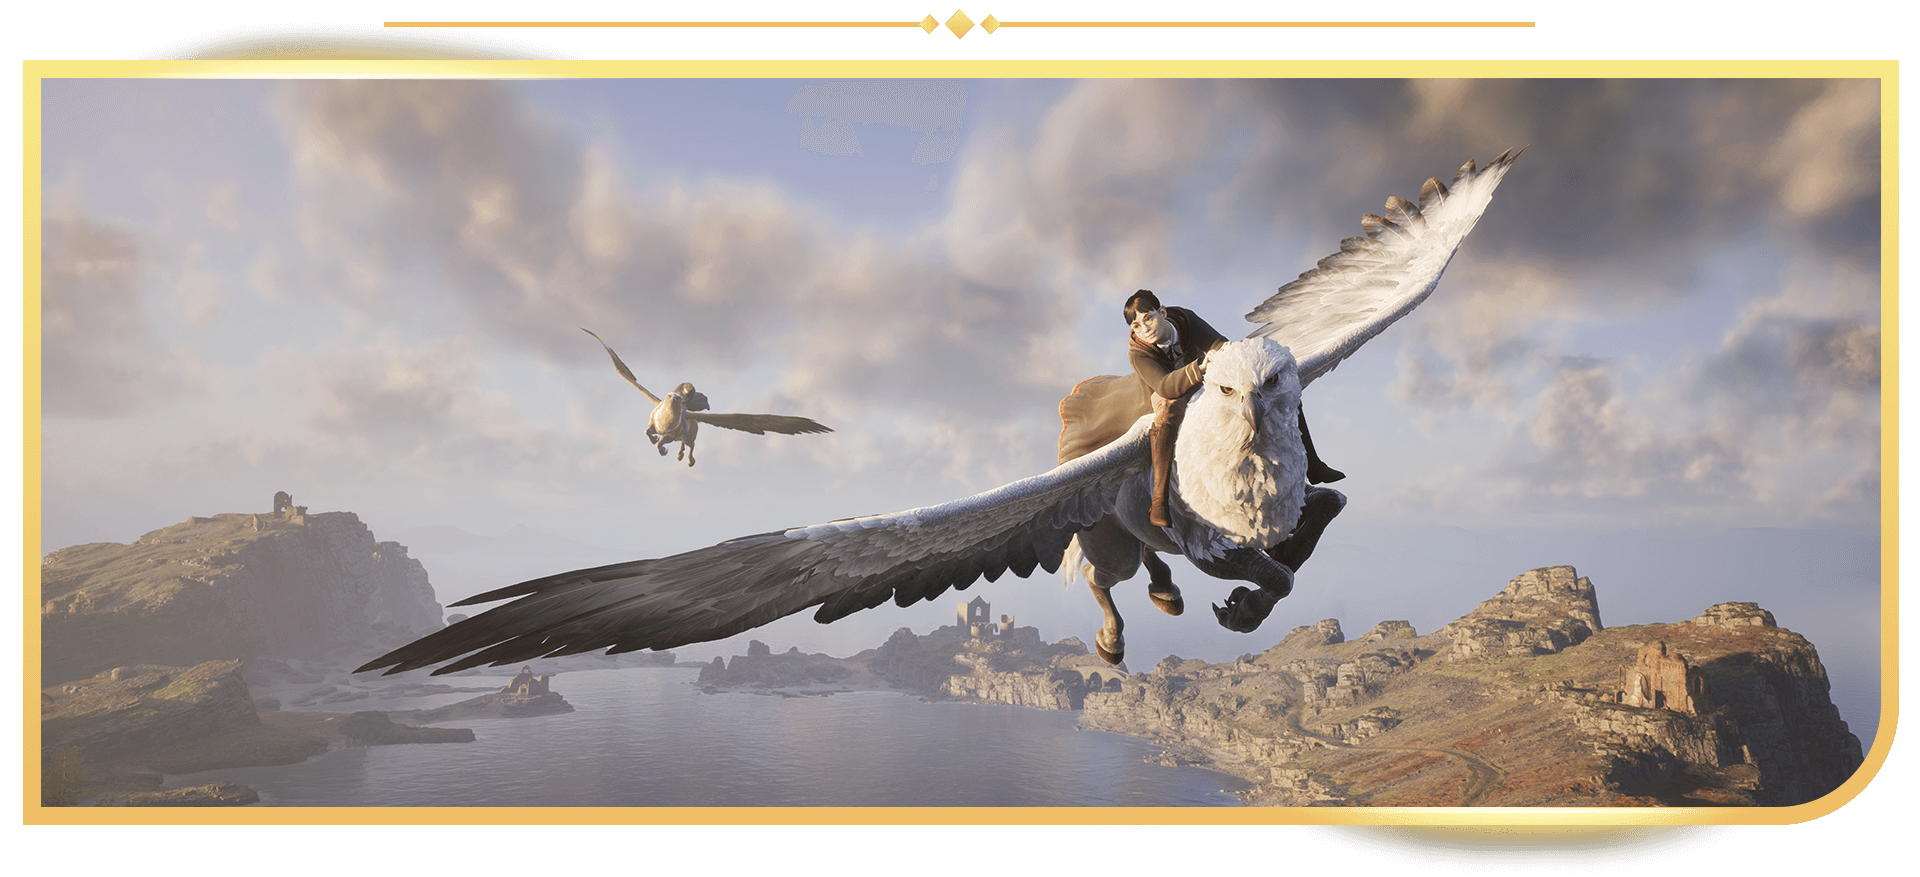 Captura de pantalla de Hogwarts Legacy con un personaje que vuela a lomos de un hipogrifo